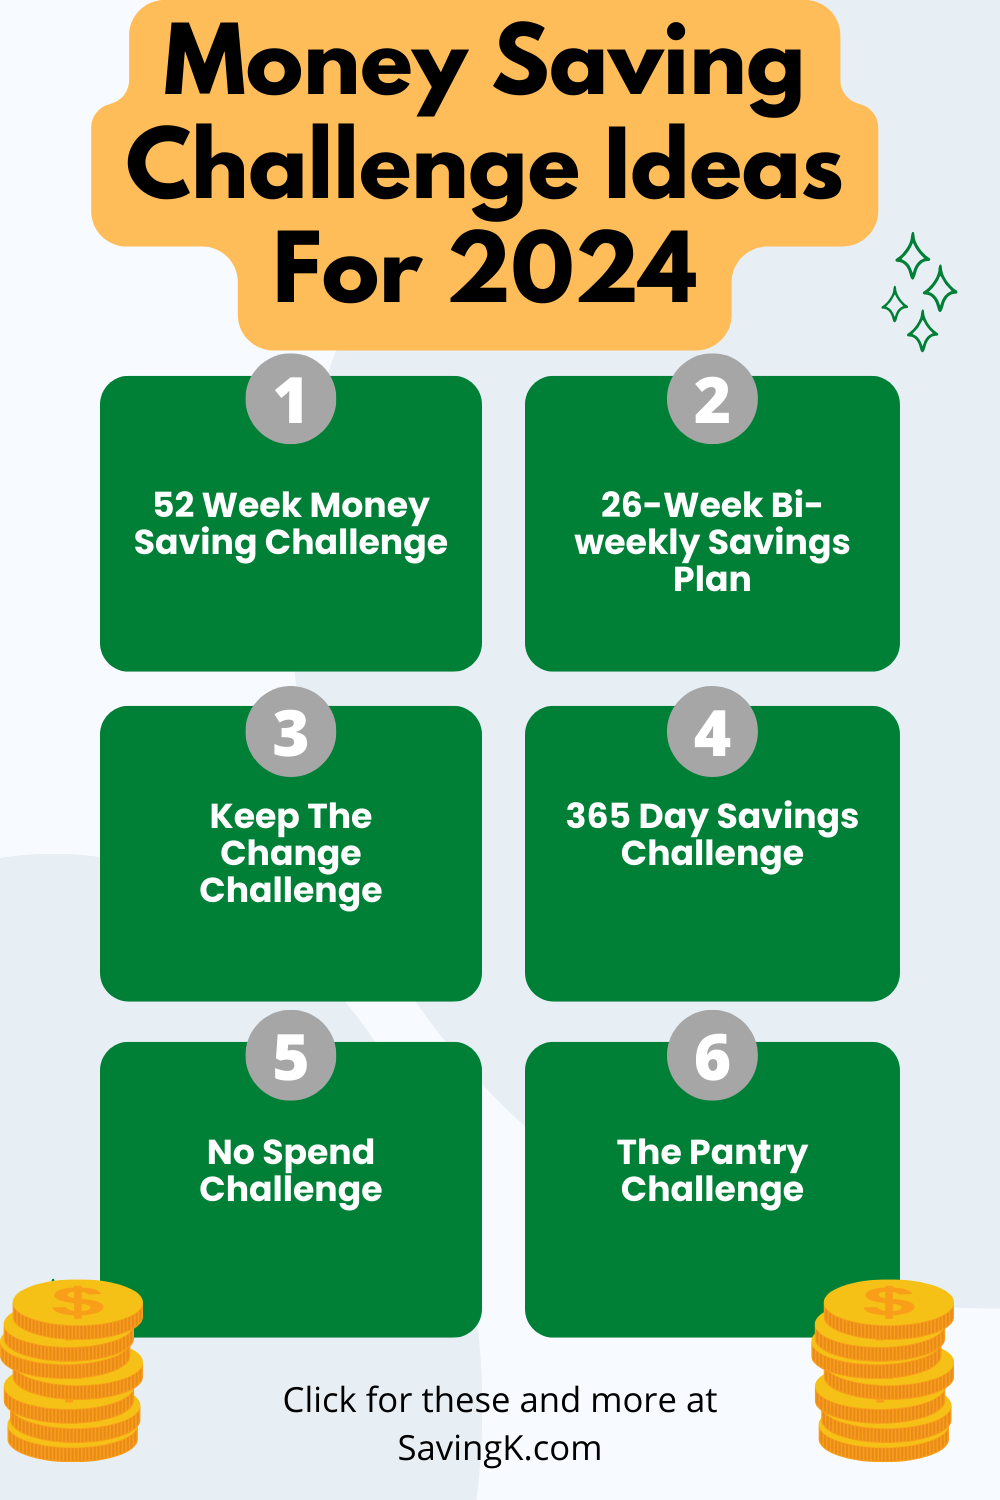 9 Money Saving Challenge Ideas To Try In 2024 - SavingK